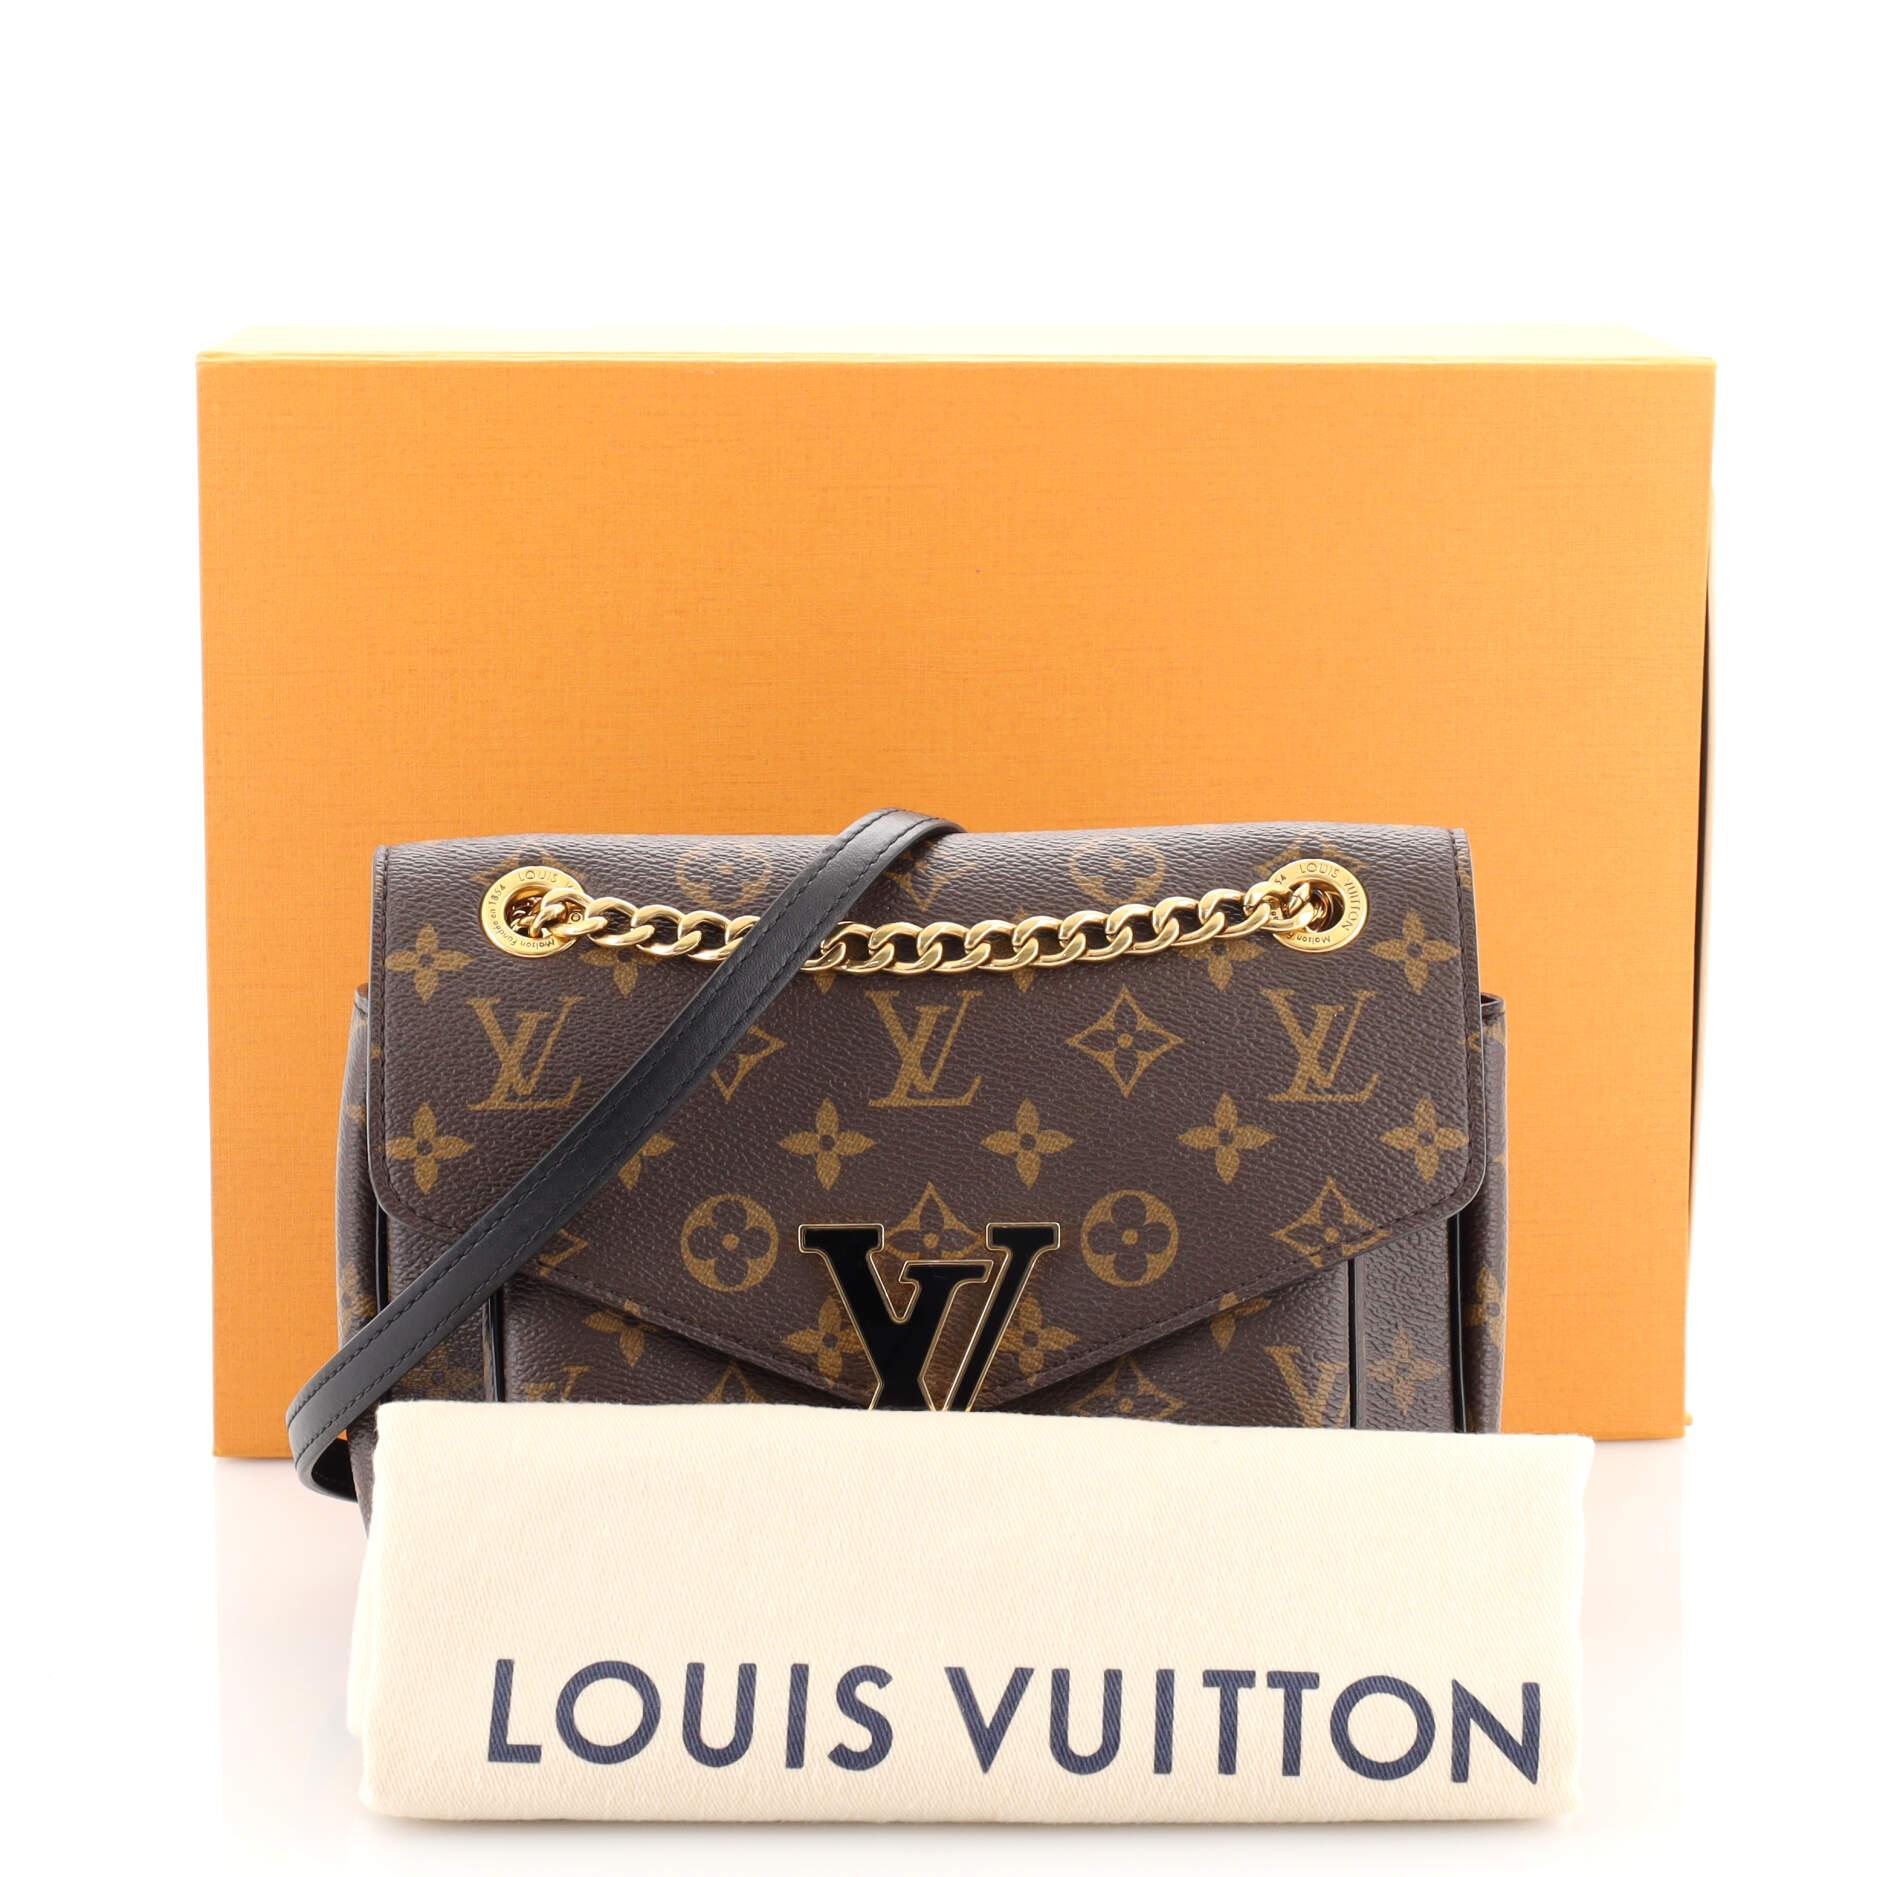 Louis Vuitton Passy Monogram - For Sale on 1stDibs  lv passy monogram, passy  louis vuitton review, louis vuitton passy review